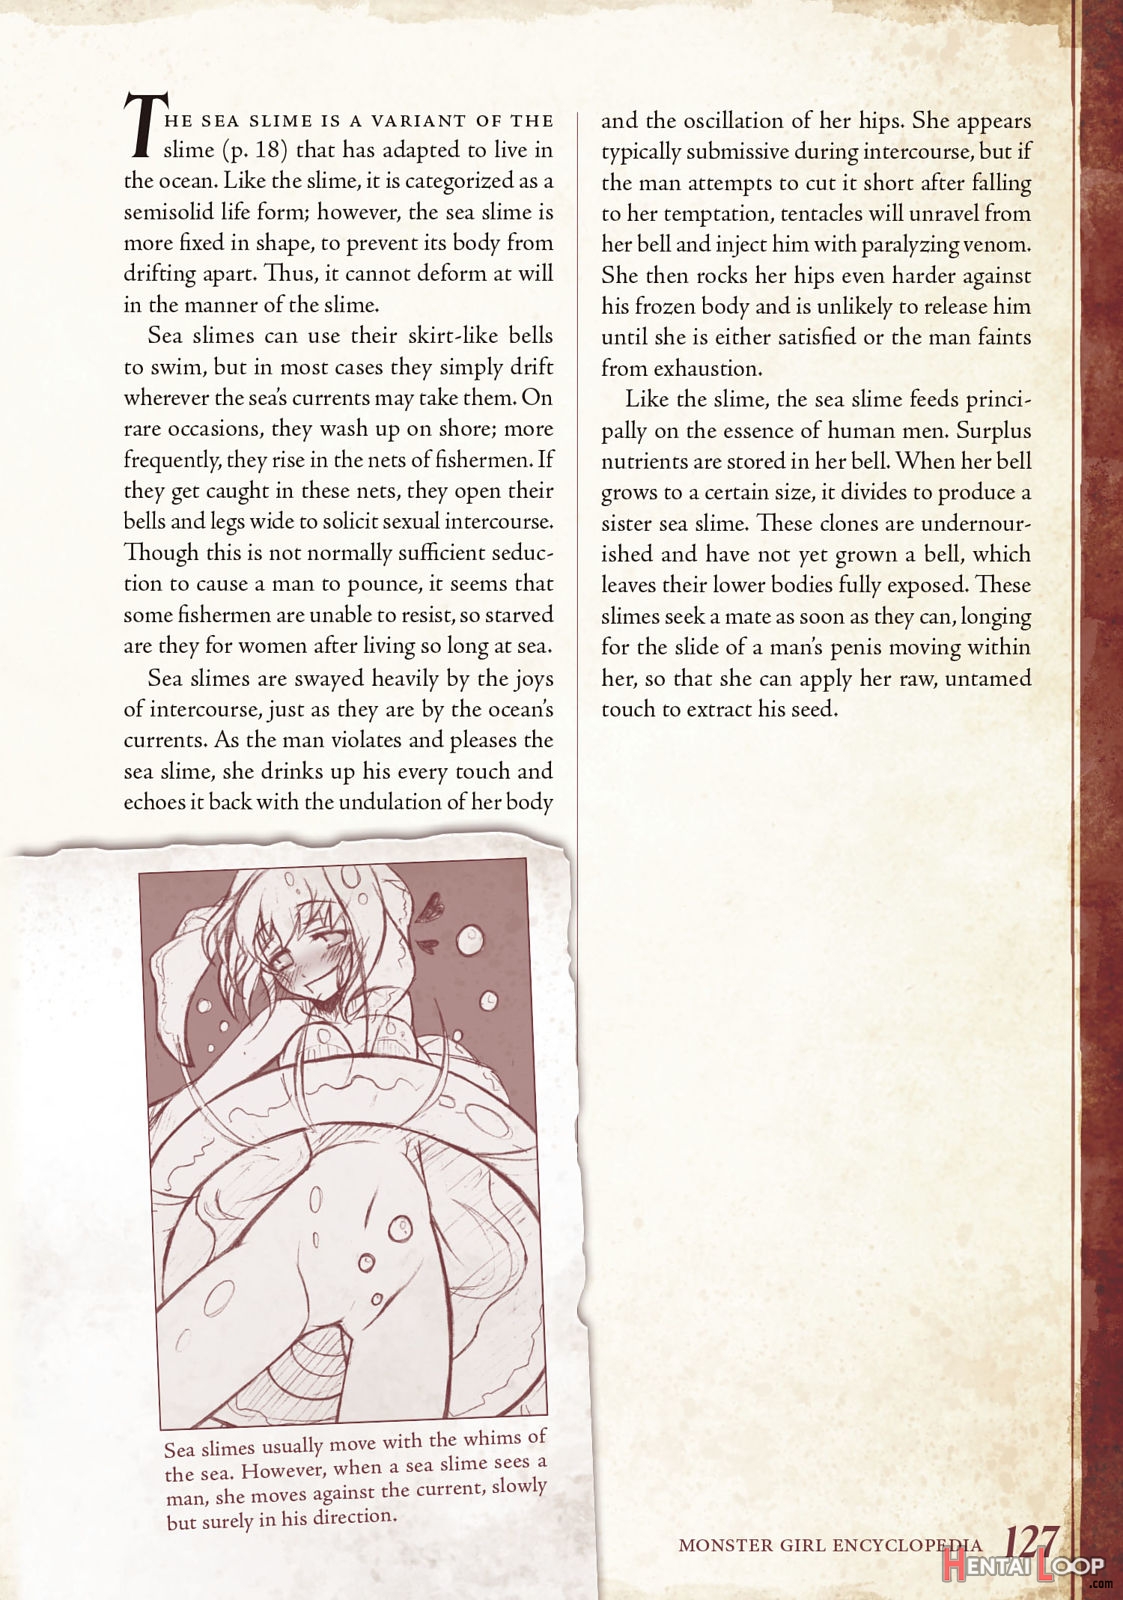 Monster Girl Encyclopedia Vol. 1 page 128